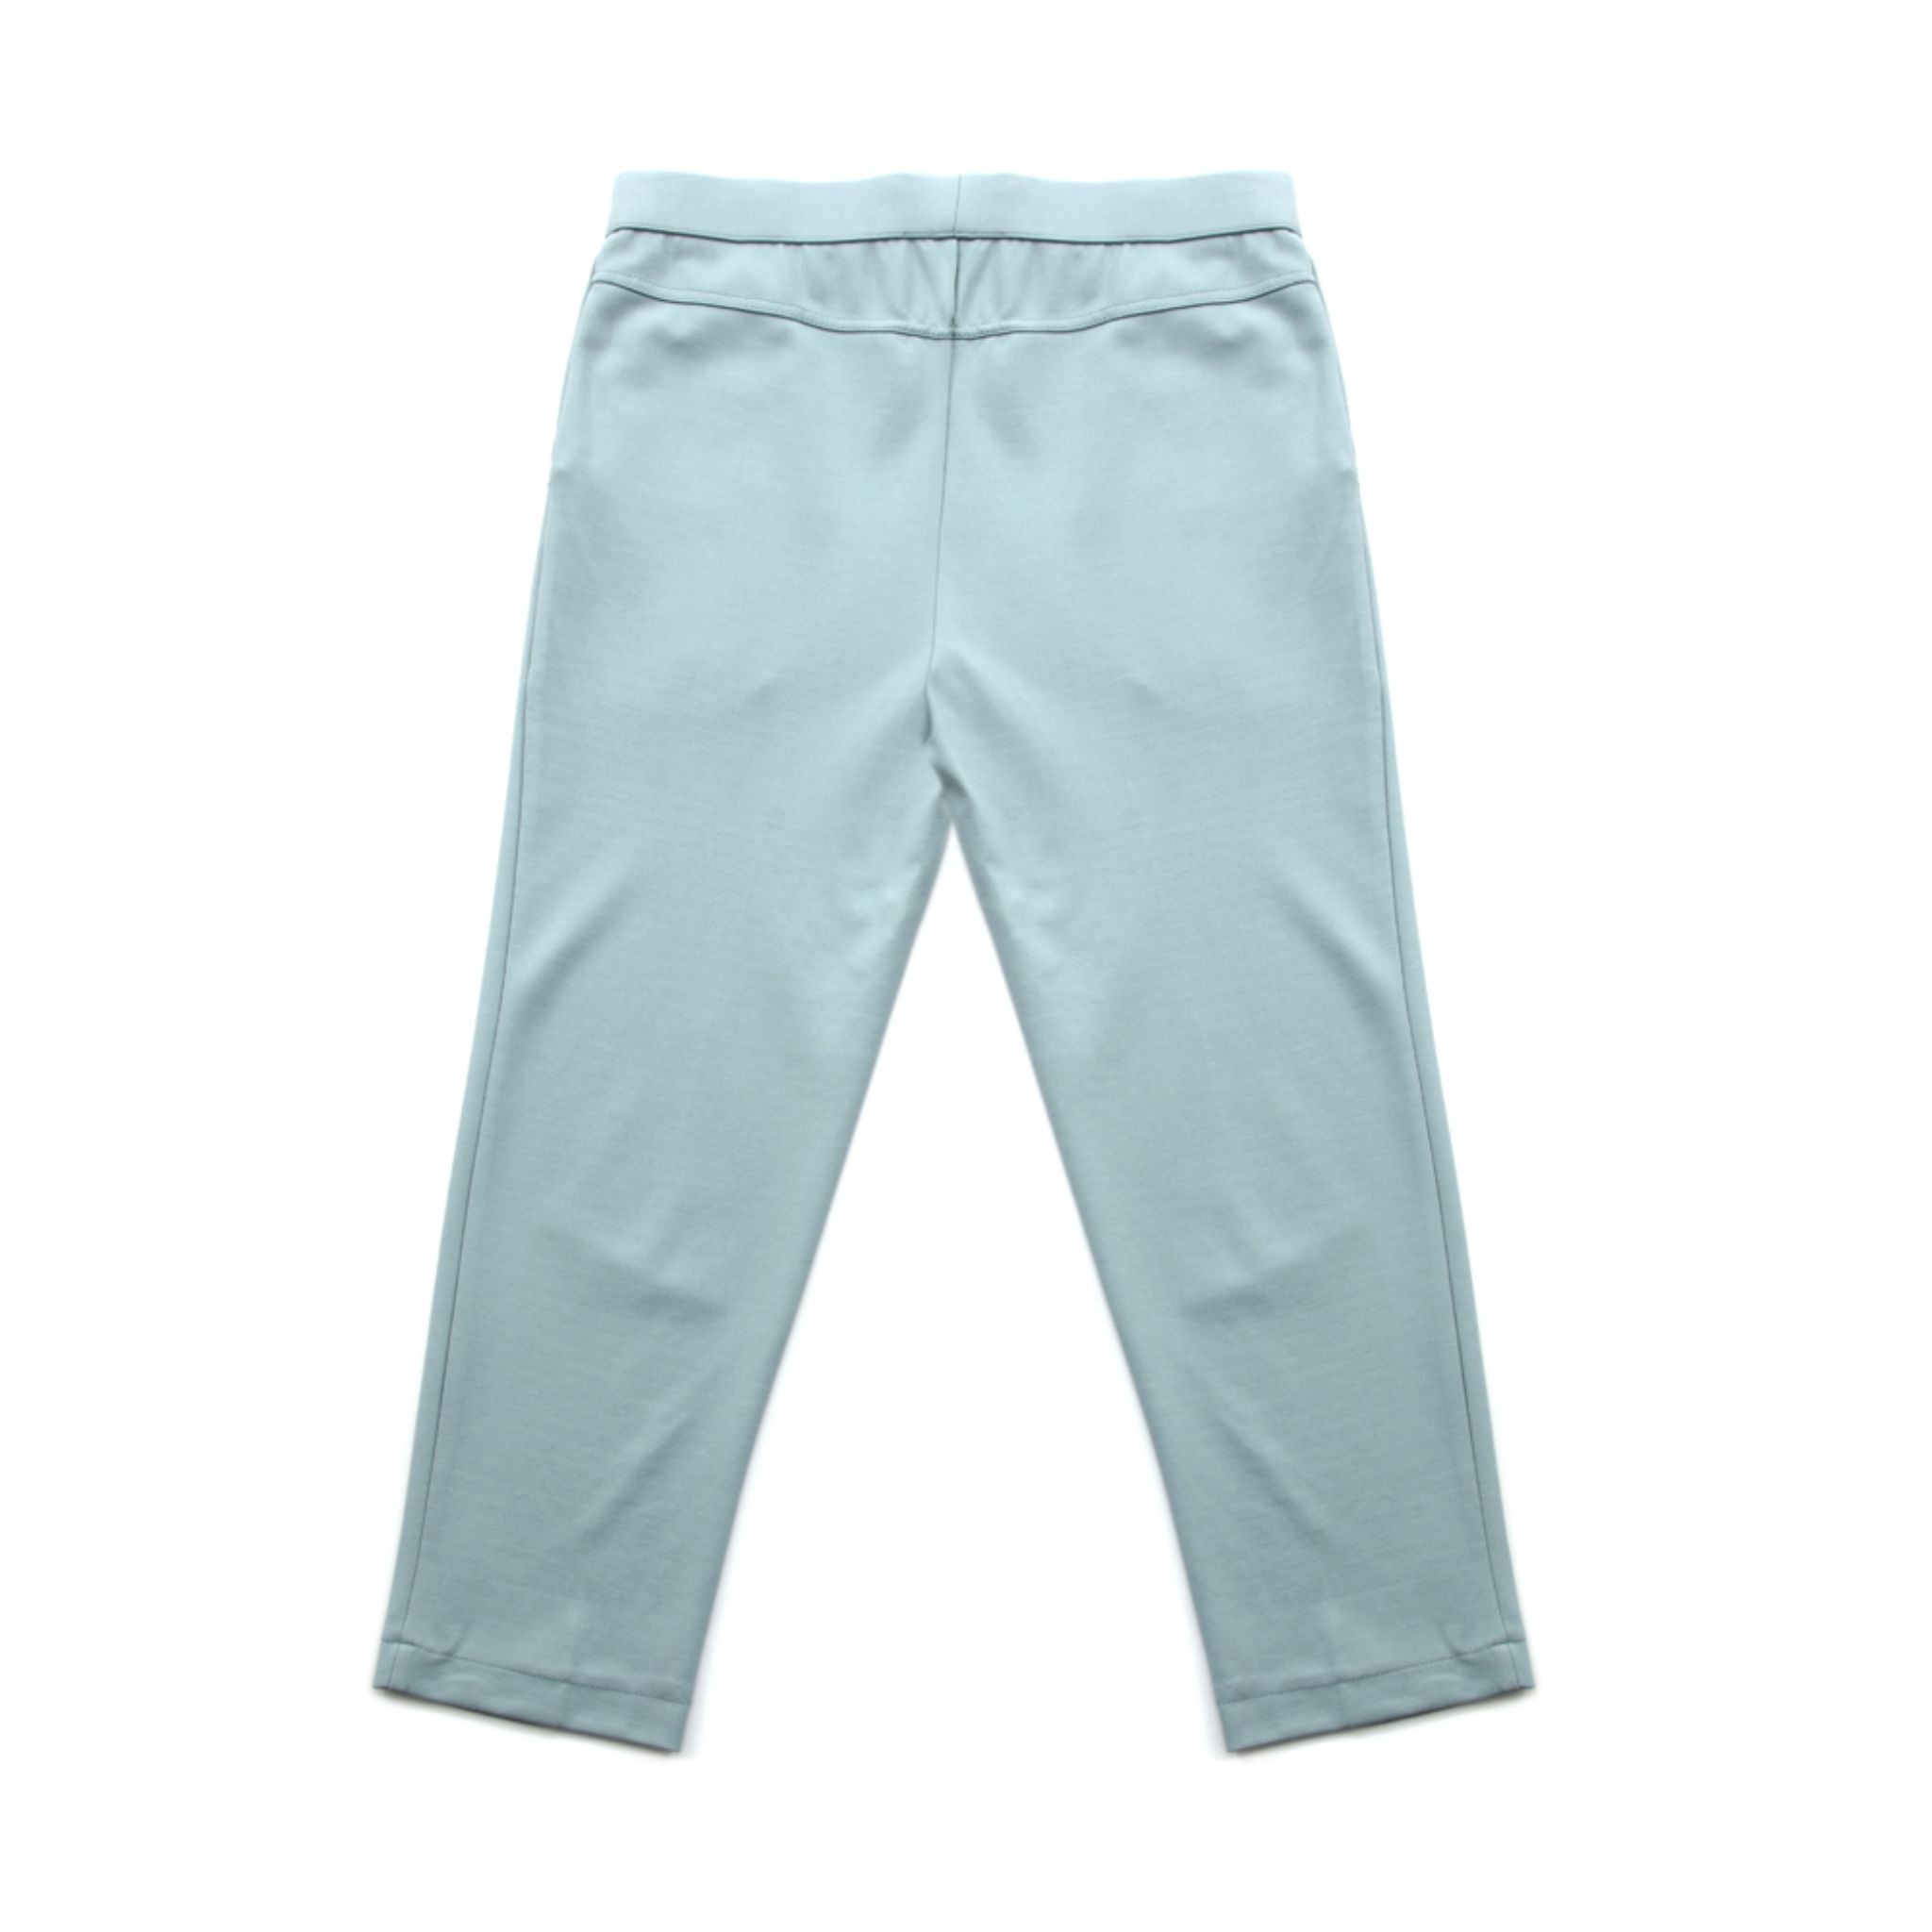 Enro Elastic Waistband Pull-On Cropped Pants - Light Blue (SCY16293A-546CP-LBL)